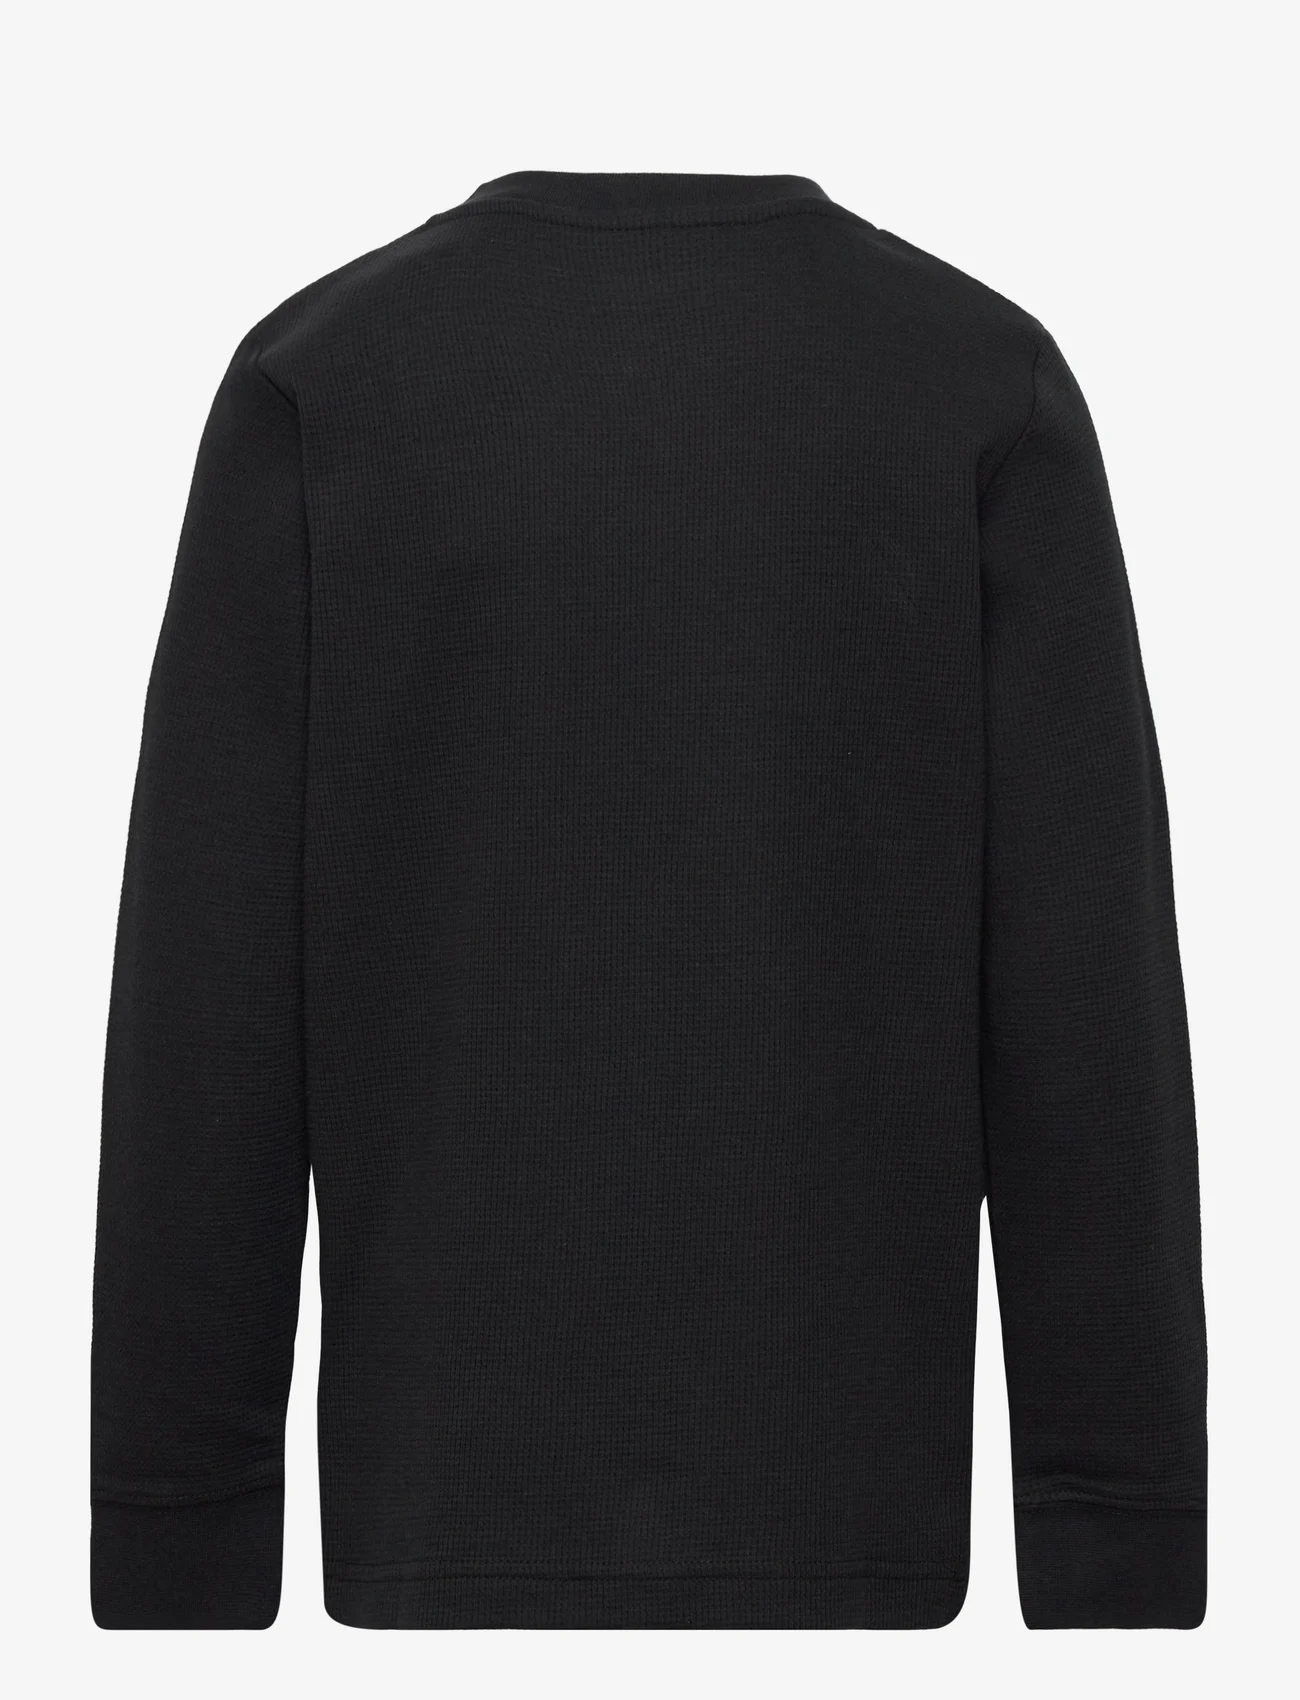 Levi's - Levi's® Thermal Crew Knit Top - langermede t-skjorter - black - 1